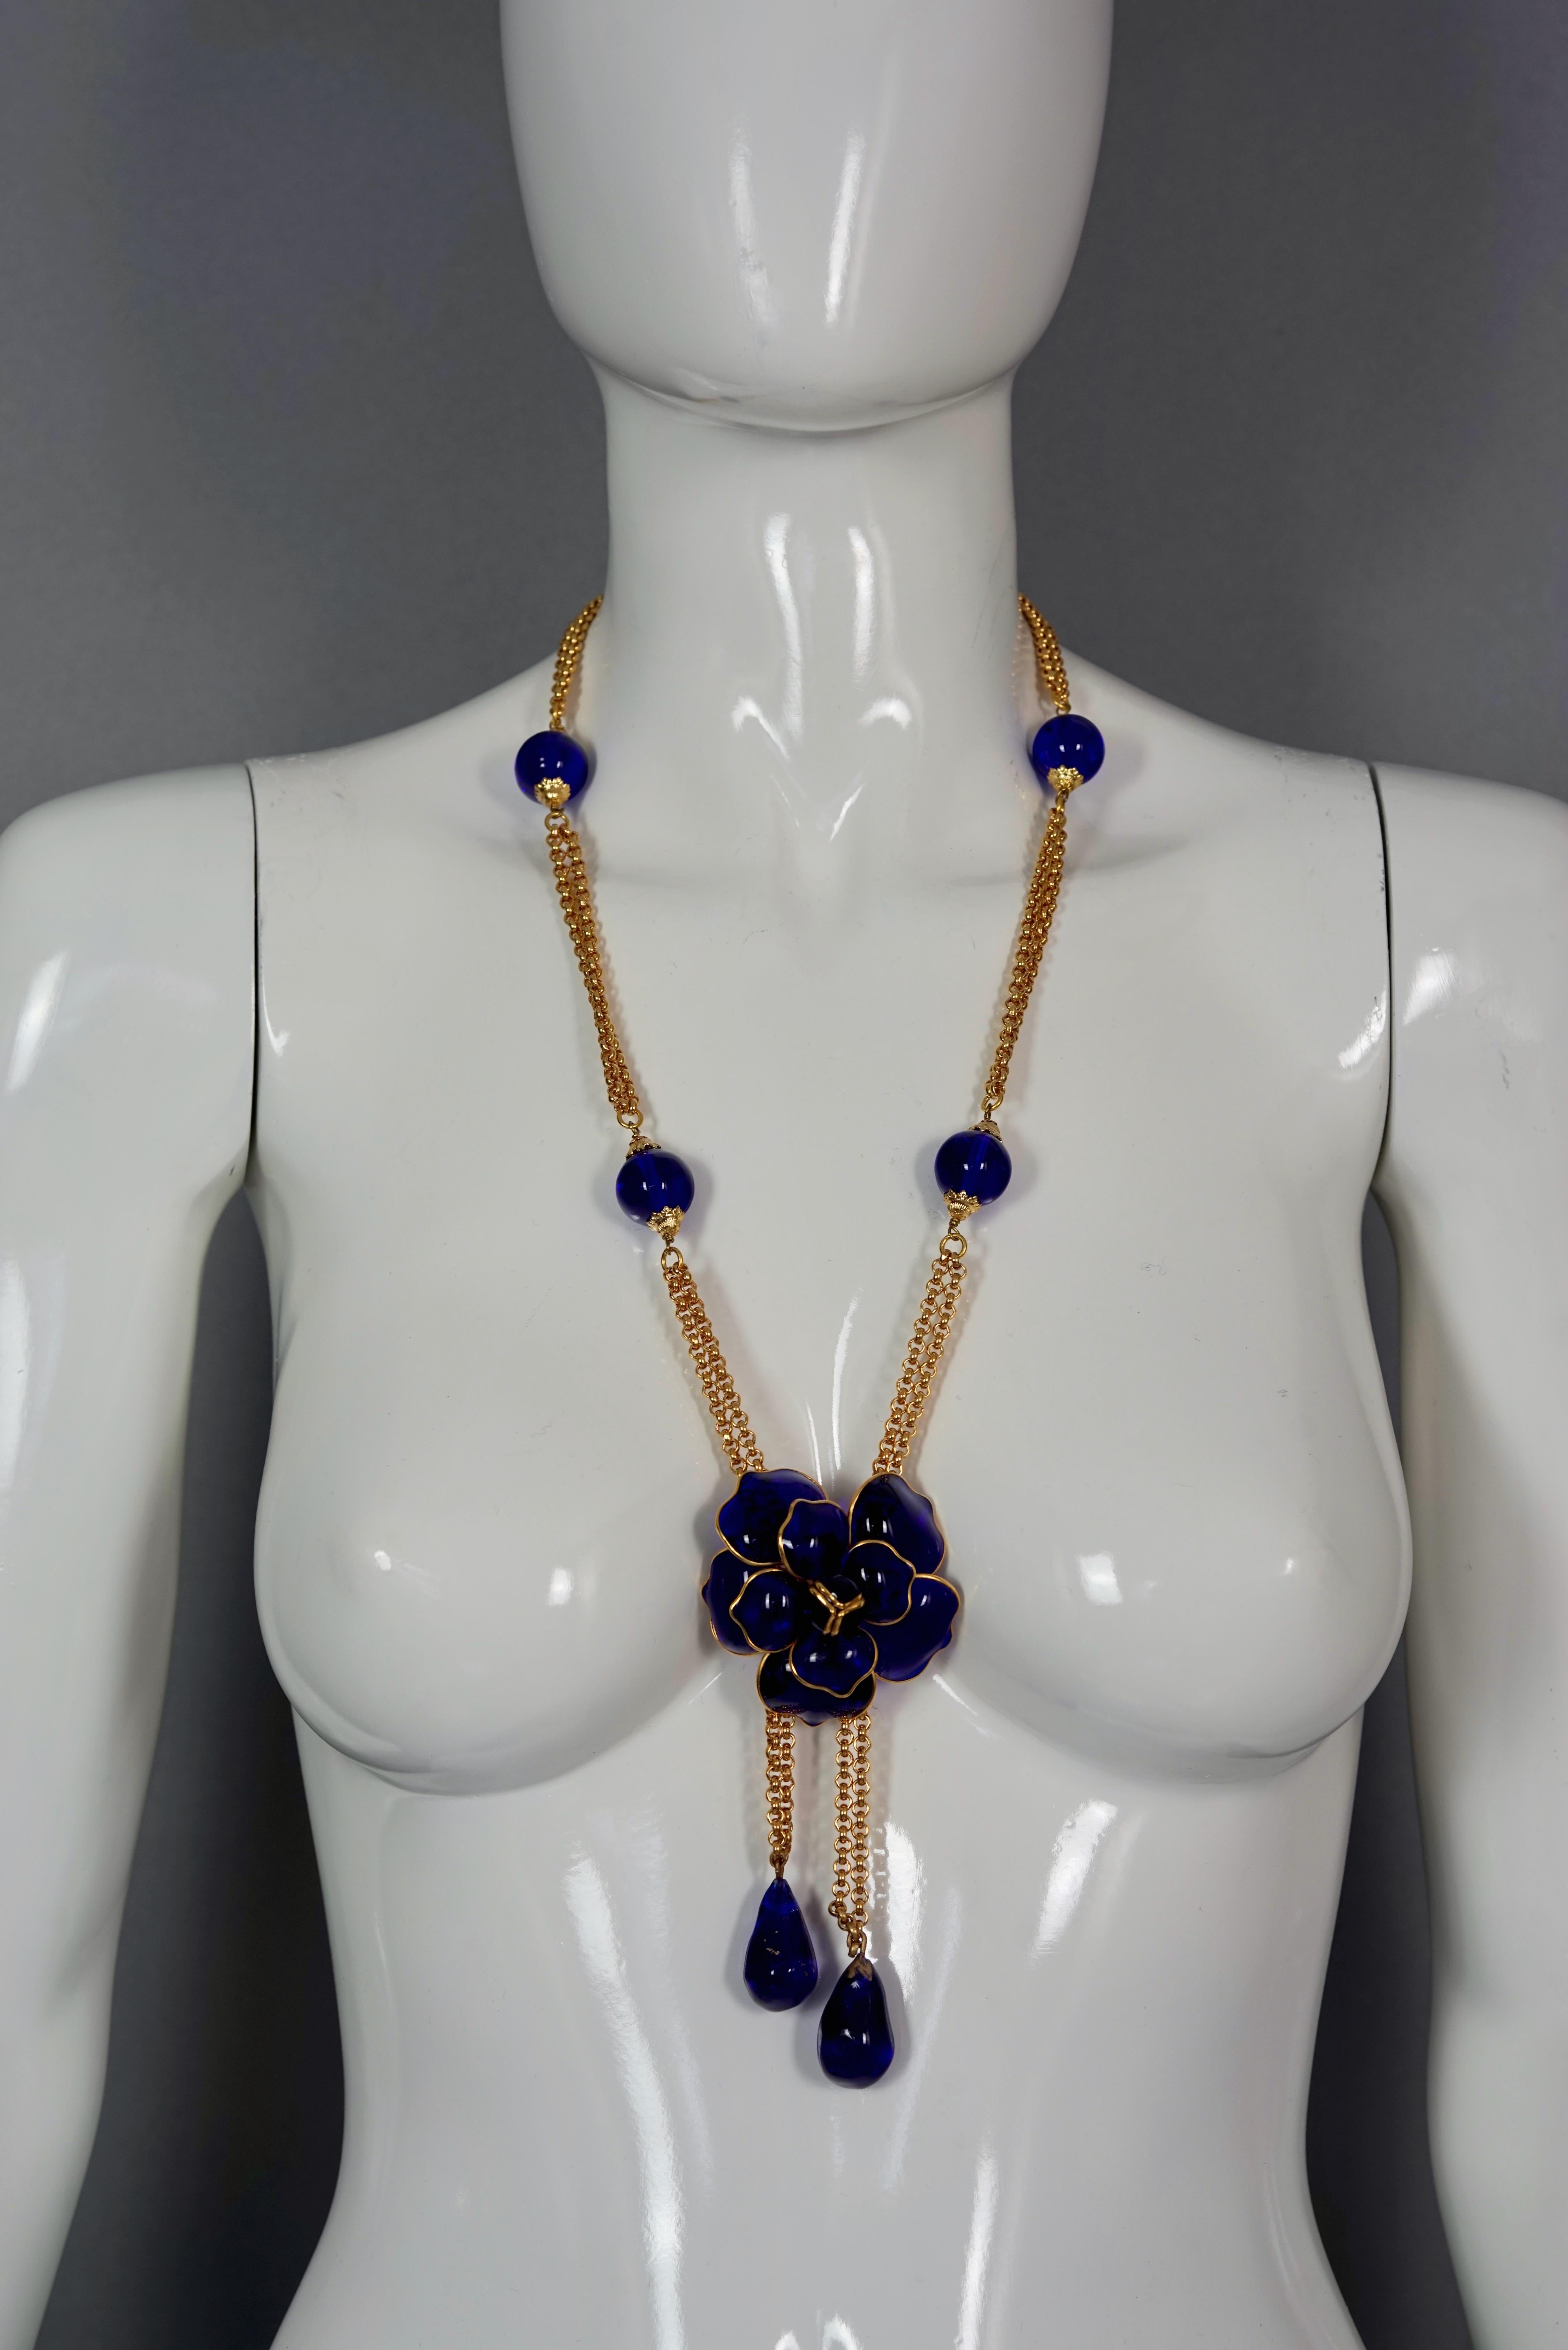 Vintage CHANEL GRIPOIX Blue Camellia Flower Multi Chain Necklace

Measurements:
Pendant Drop: 5.11 inches (13 cm)
Wearable Length: 27.55 inches to 29.72 inches (70 cm to 75.5 cm)

Features:
- 100% Authentic CHANEL.
- Blue Gripoix/ poured glass